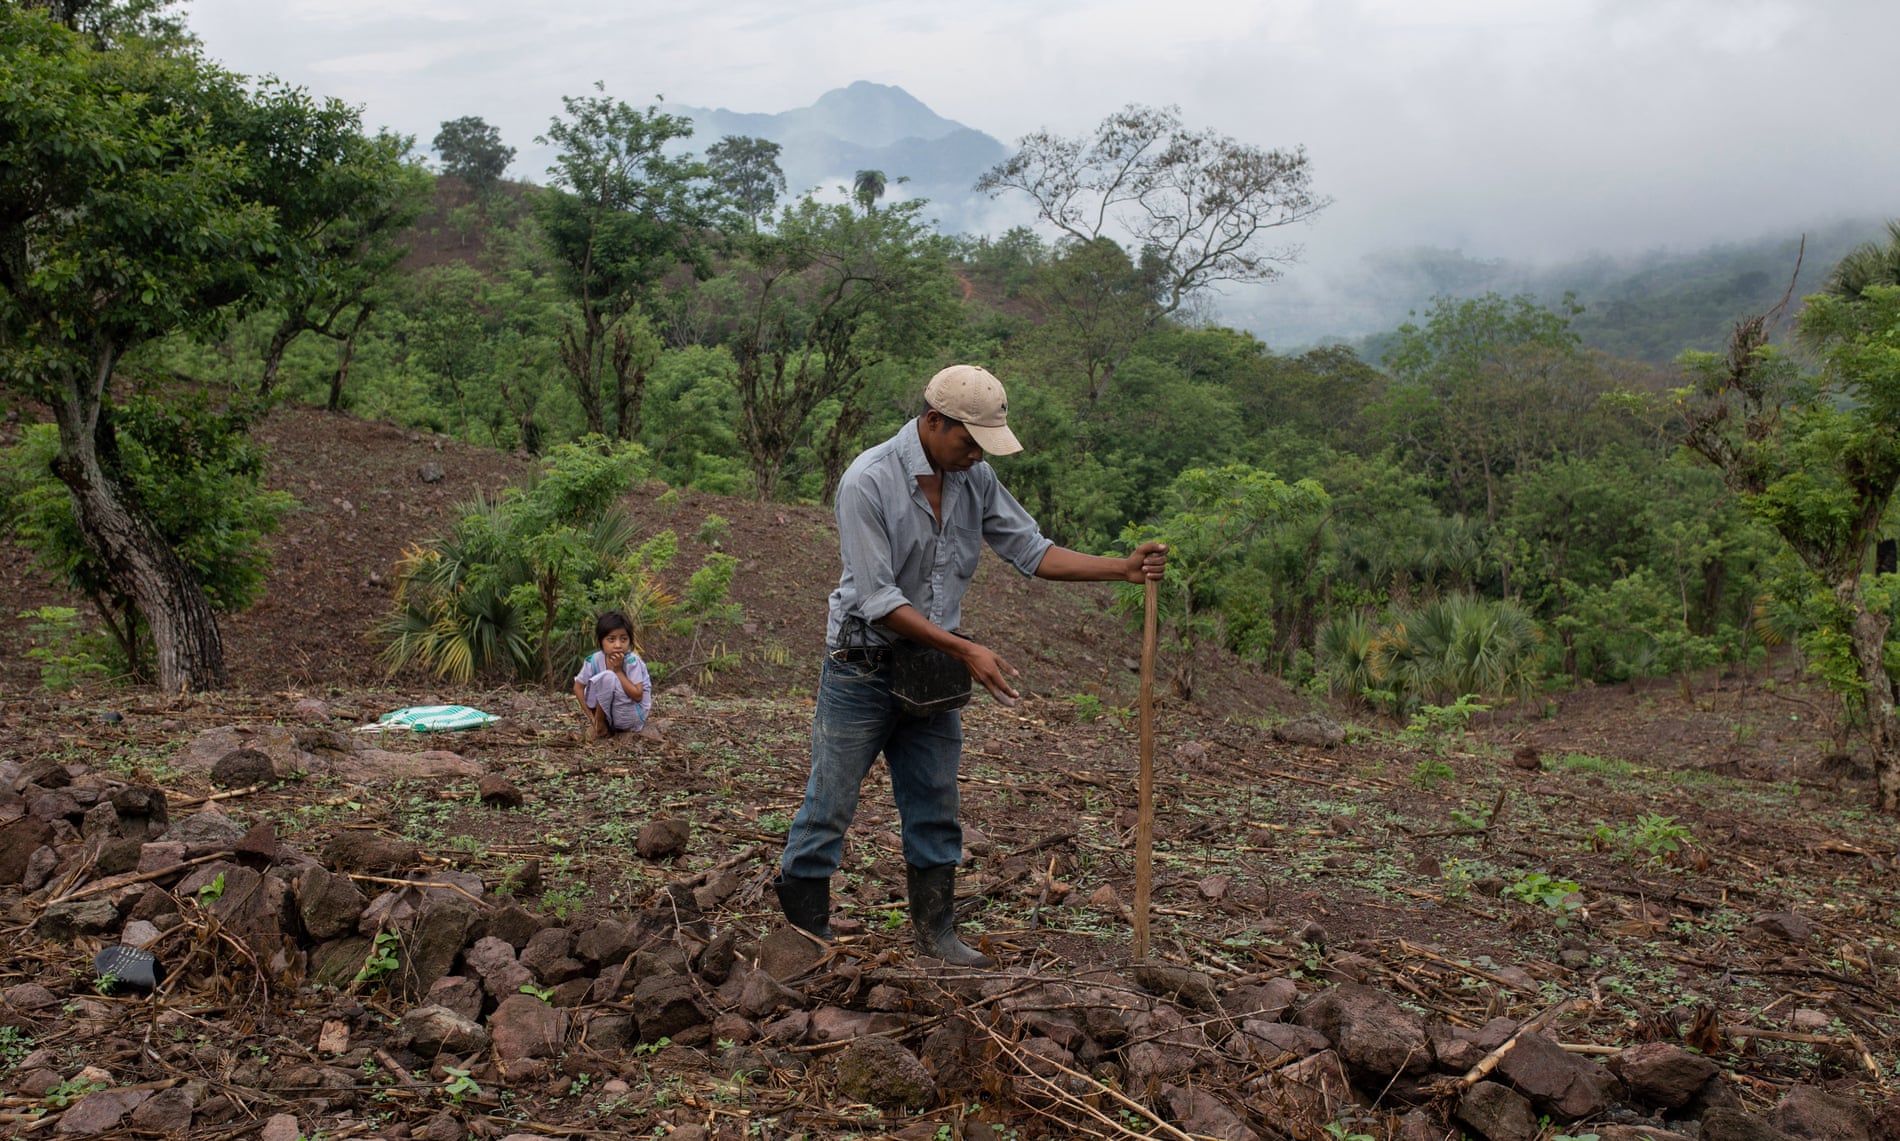 Carlos Gutierrez, 20, plants corn along a sloped terrain as his niece Delmi, 6, watches from behind.